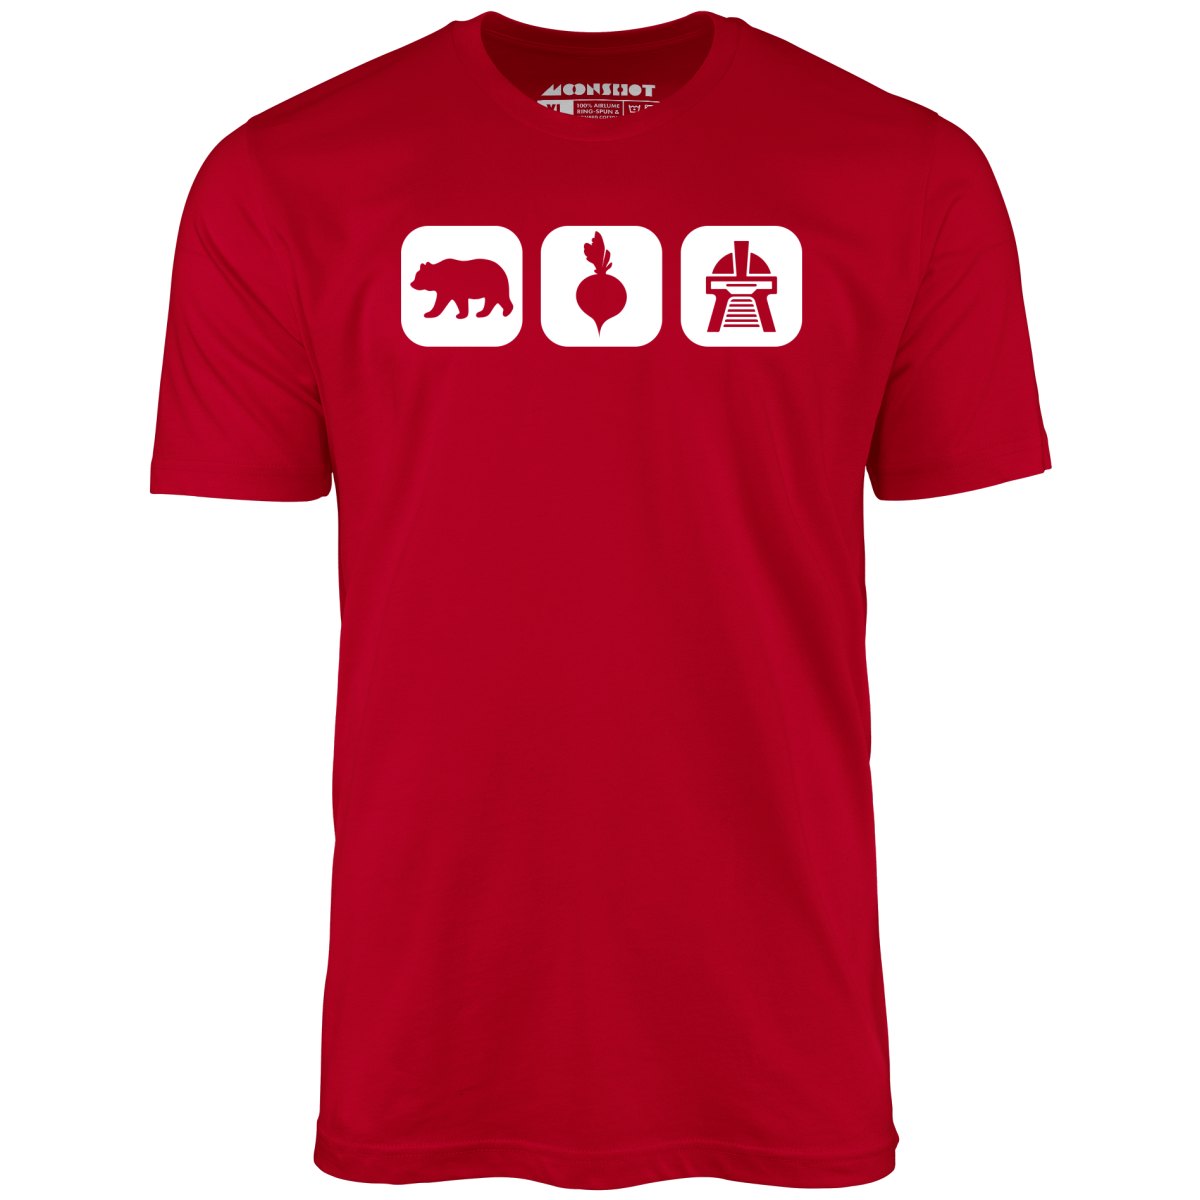 Bears Beets Battlestar Galactica v2 - Unisex T-Shirt